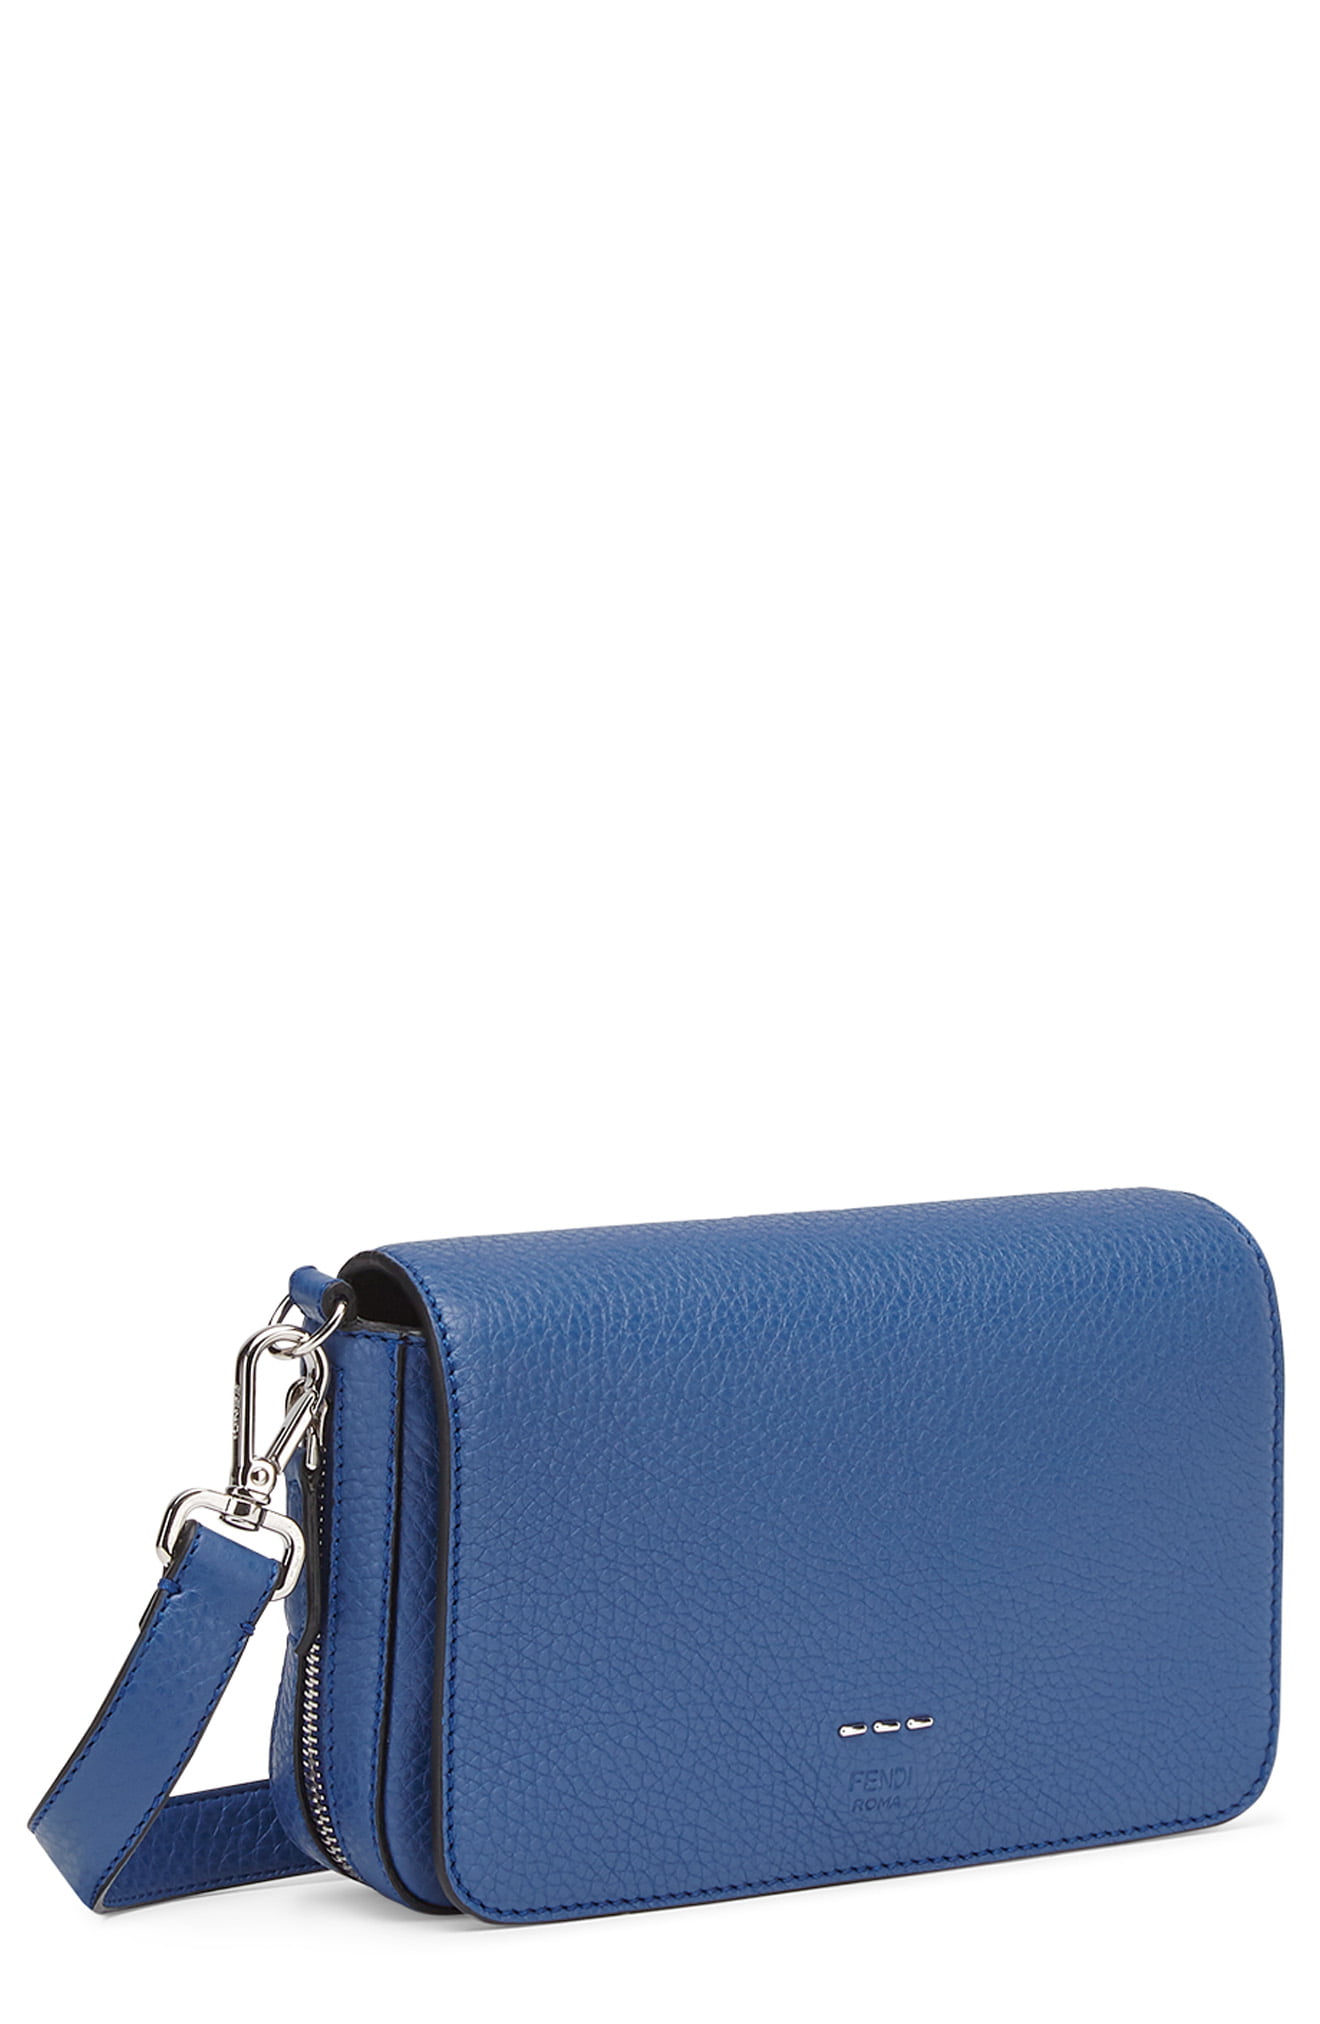 blue fendi purse